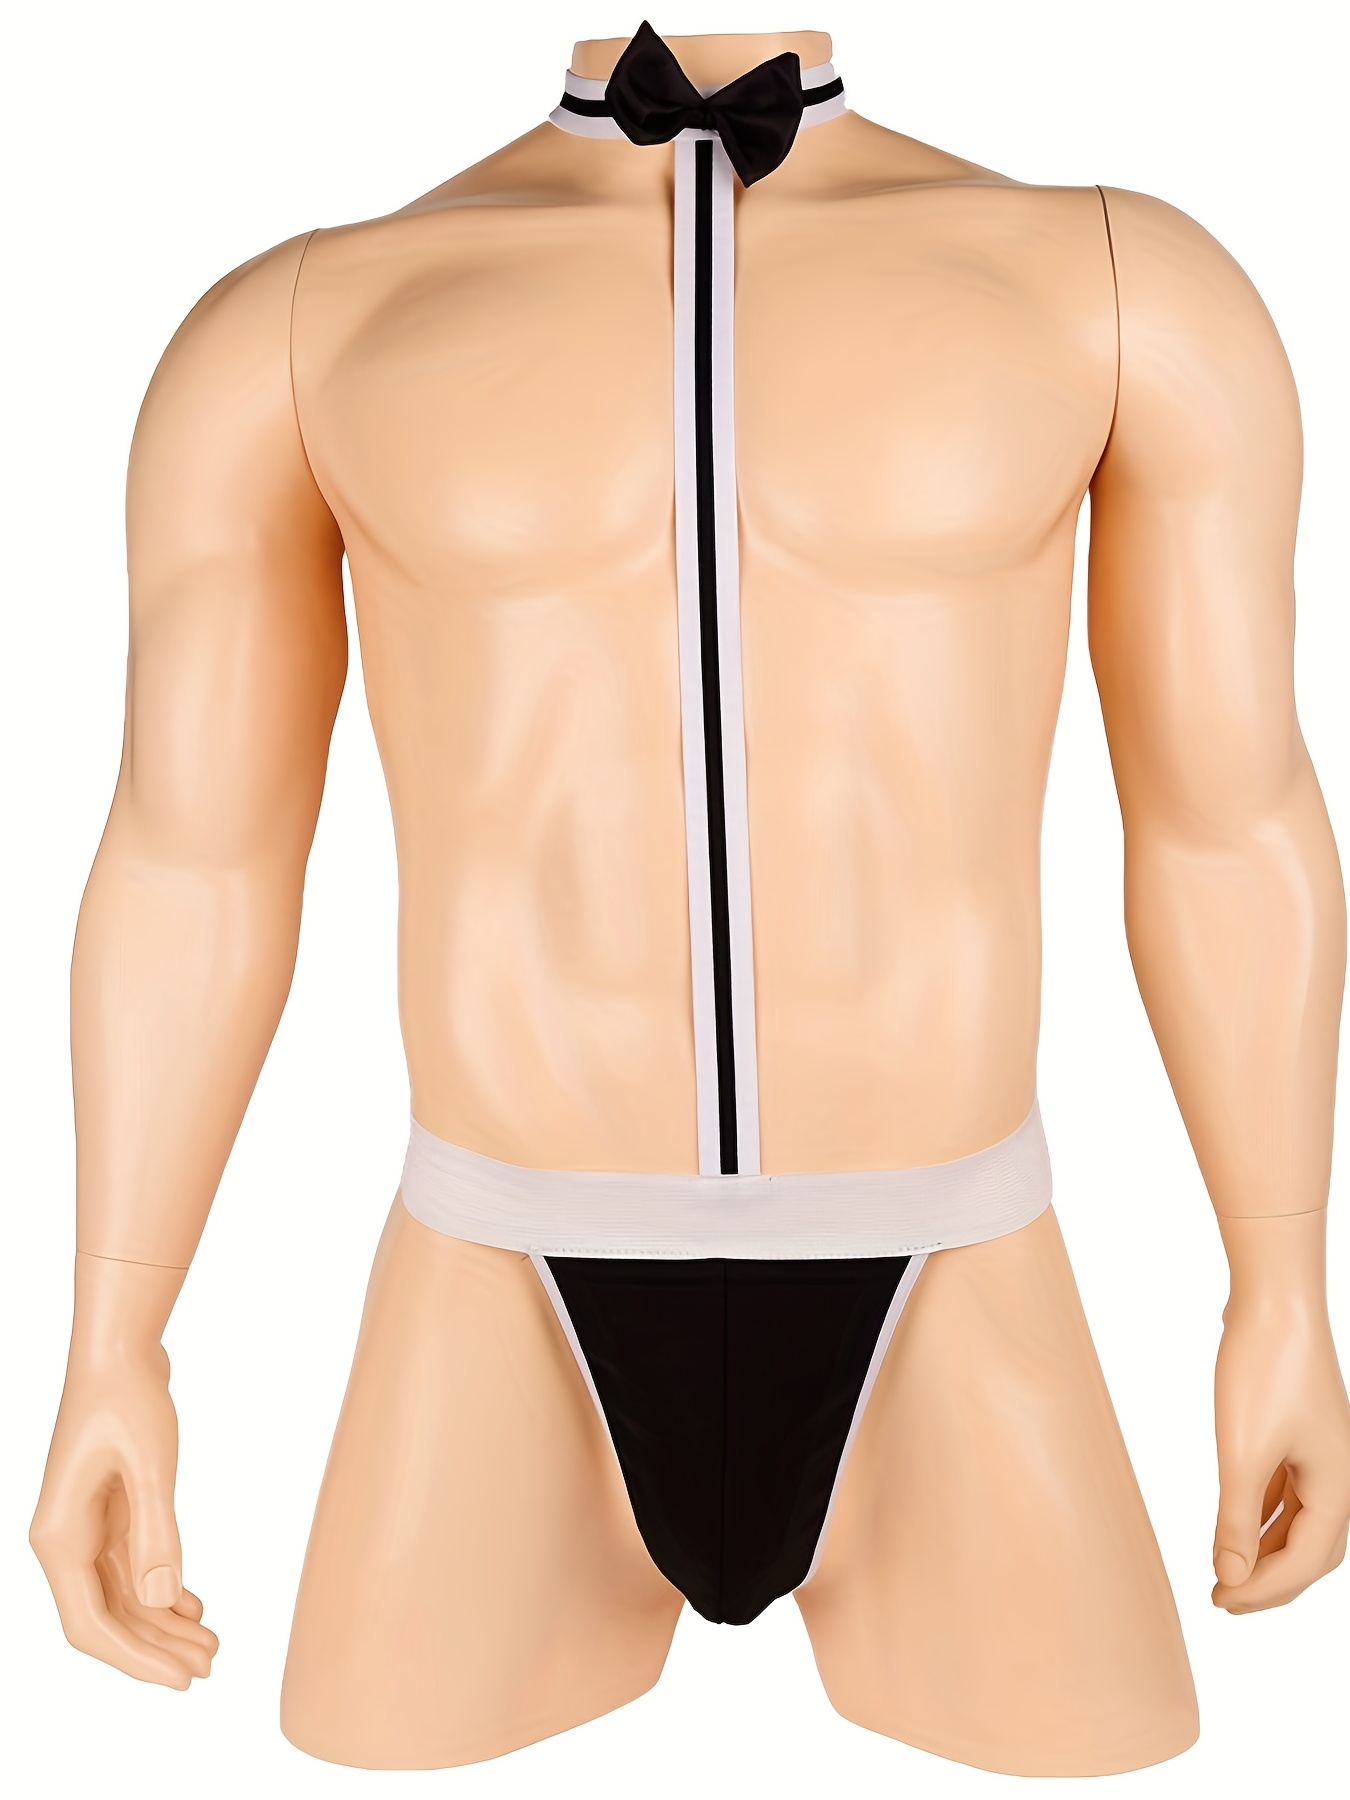 US Sexy Men Waiter Lingerie Set Tuxedo Thong G-String Outfit Underwear  Briefs